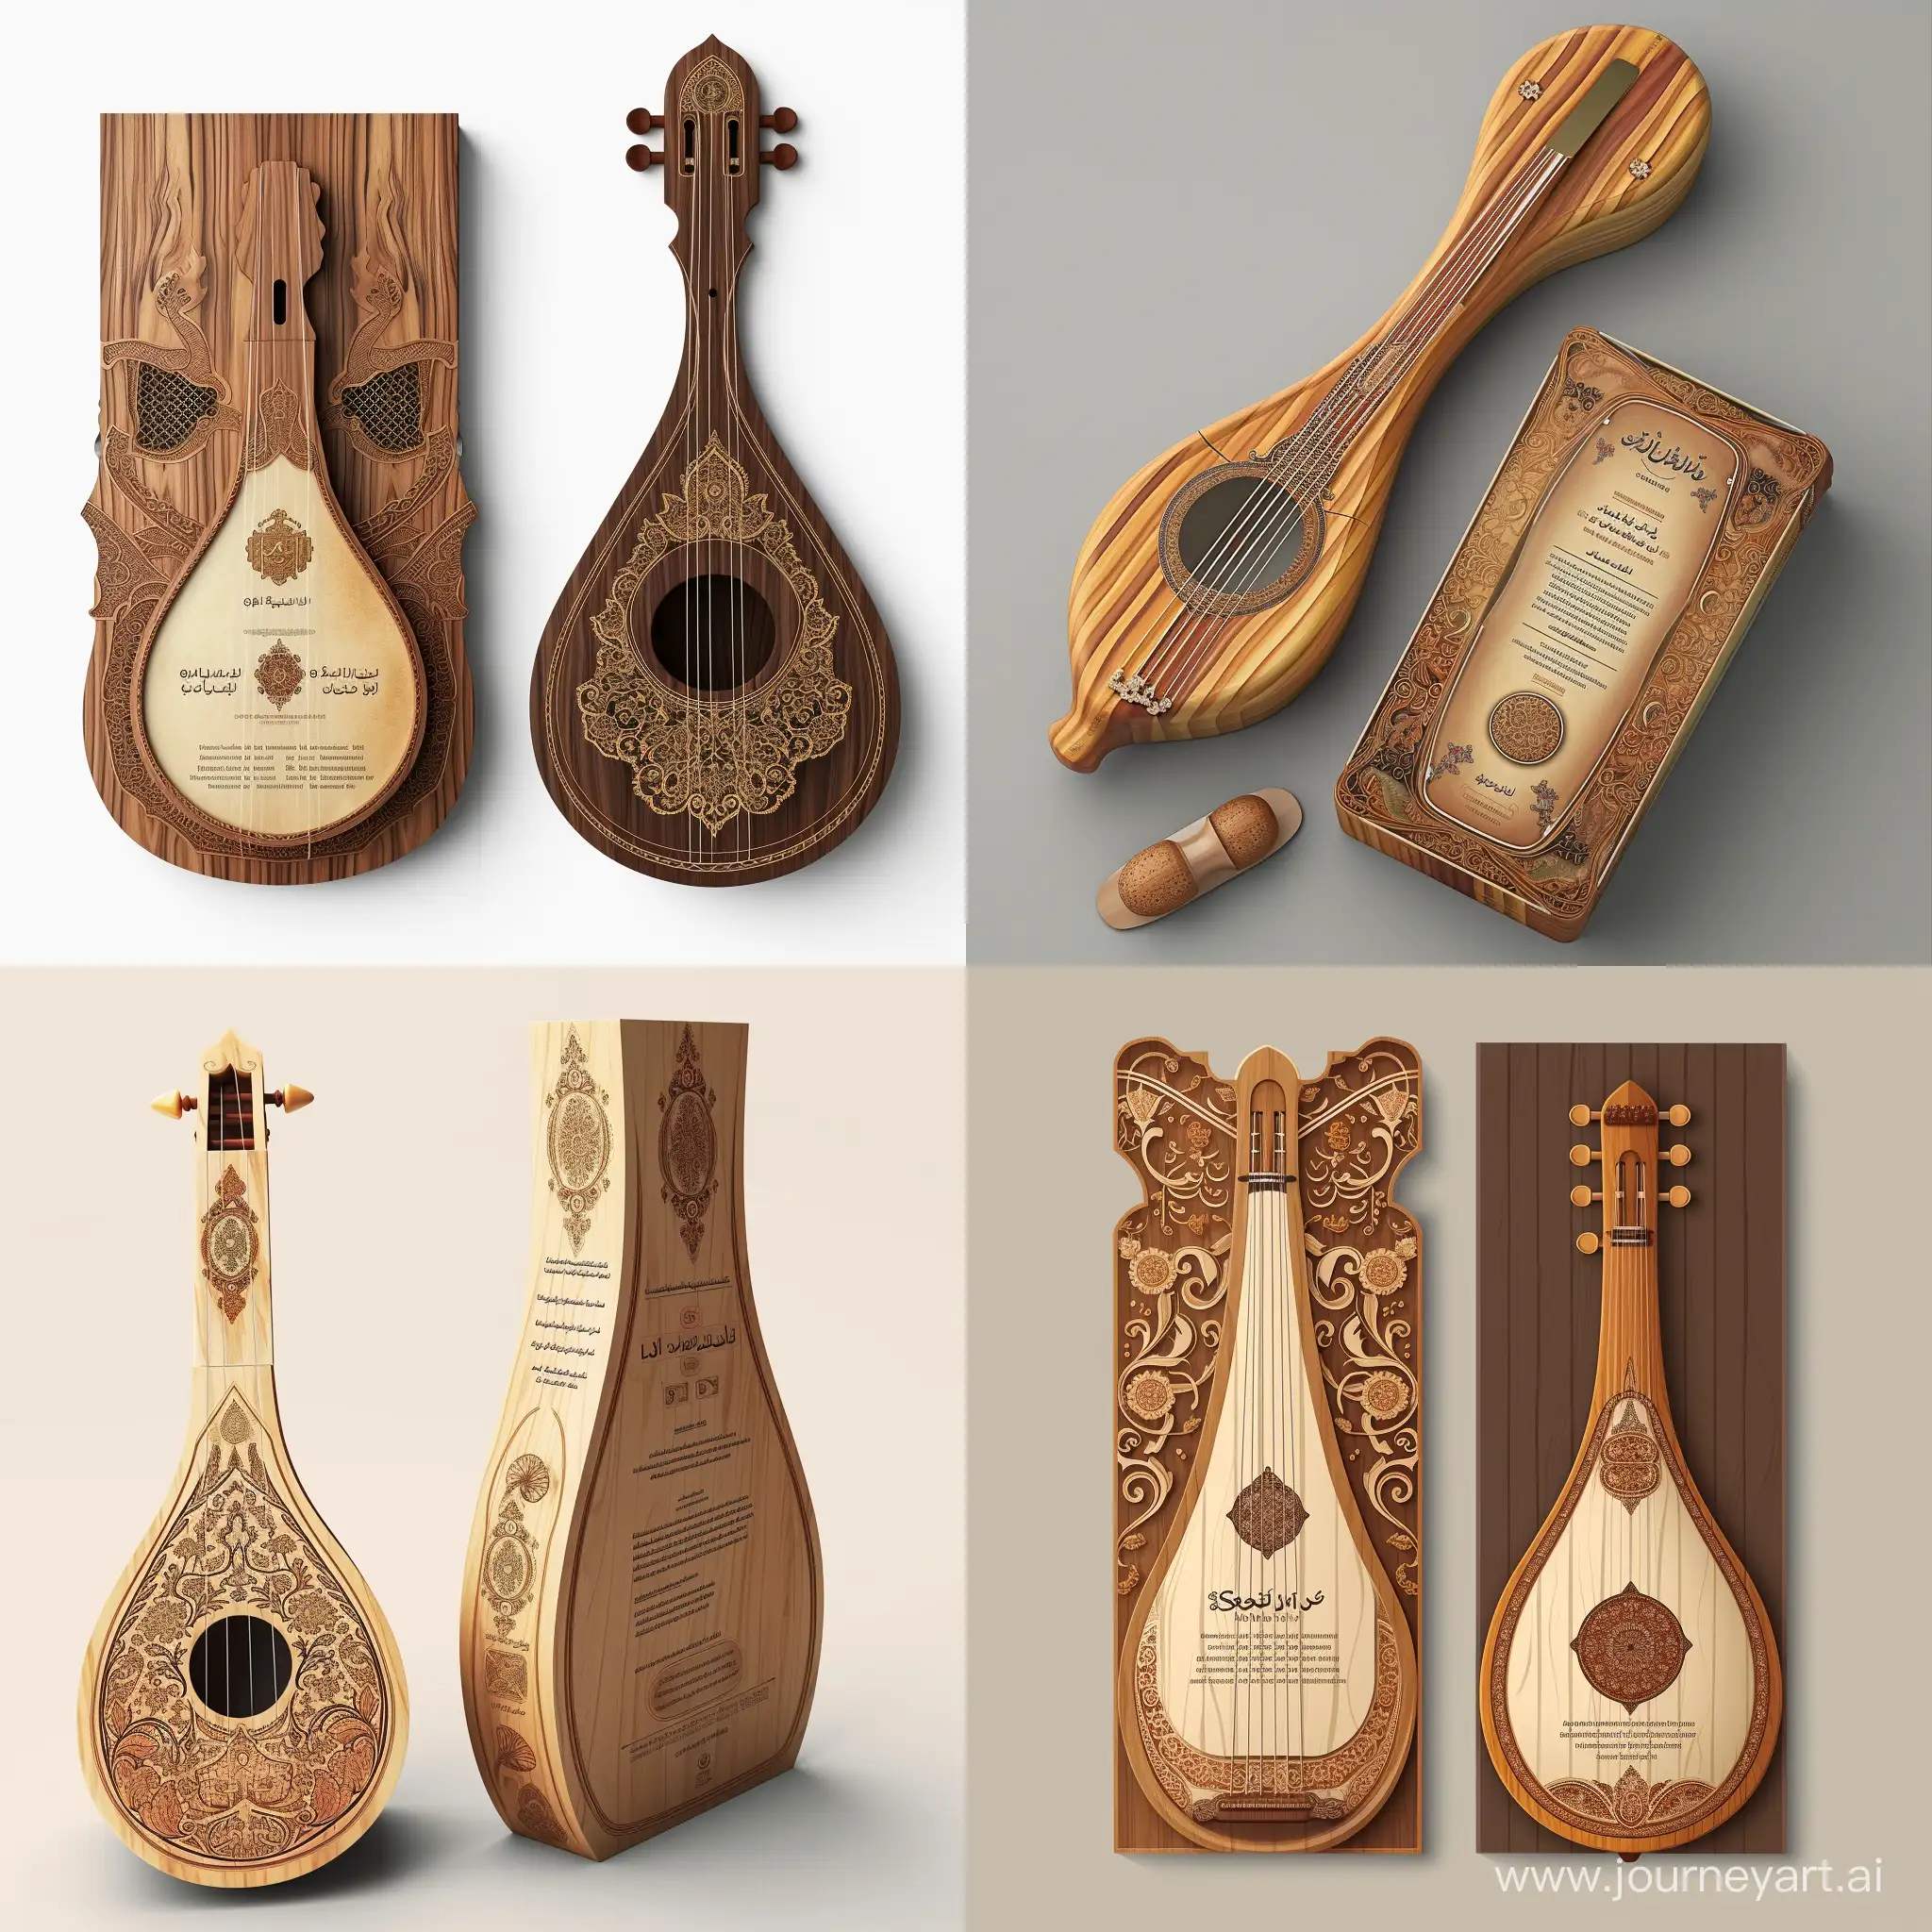 Artistic-Wooden-Setar-and-Daf-Packaging-Celebrating-Irans-Musical-Heritage